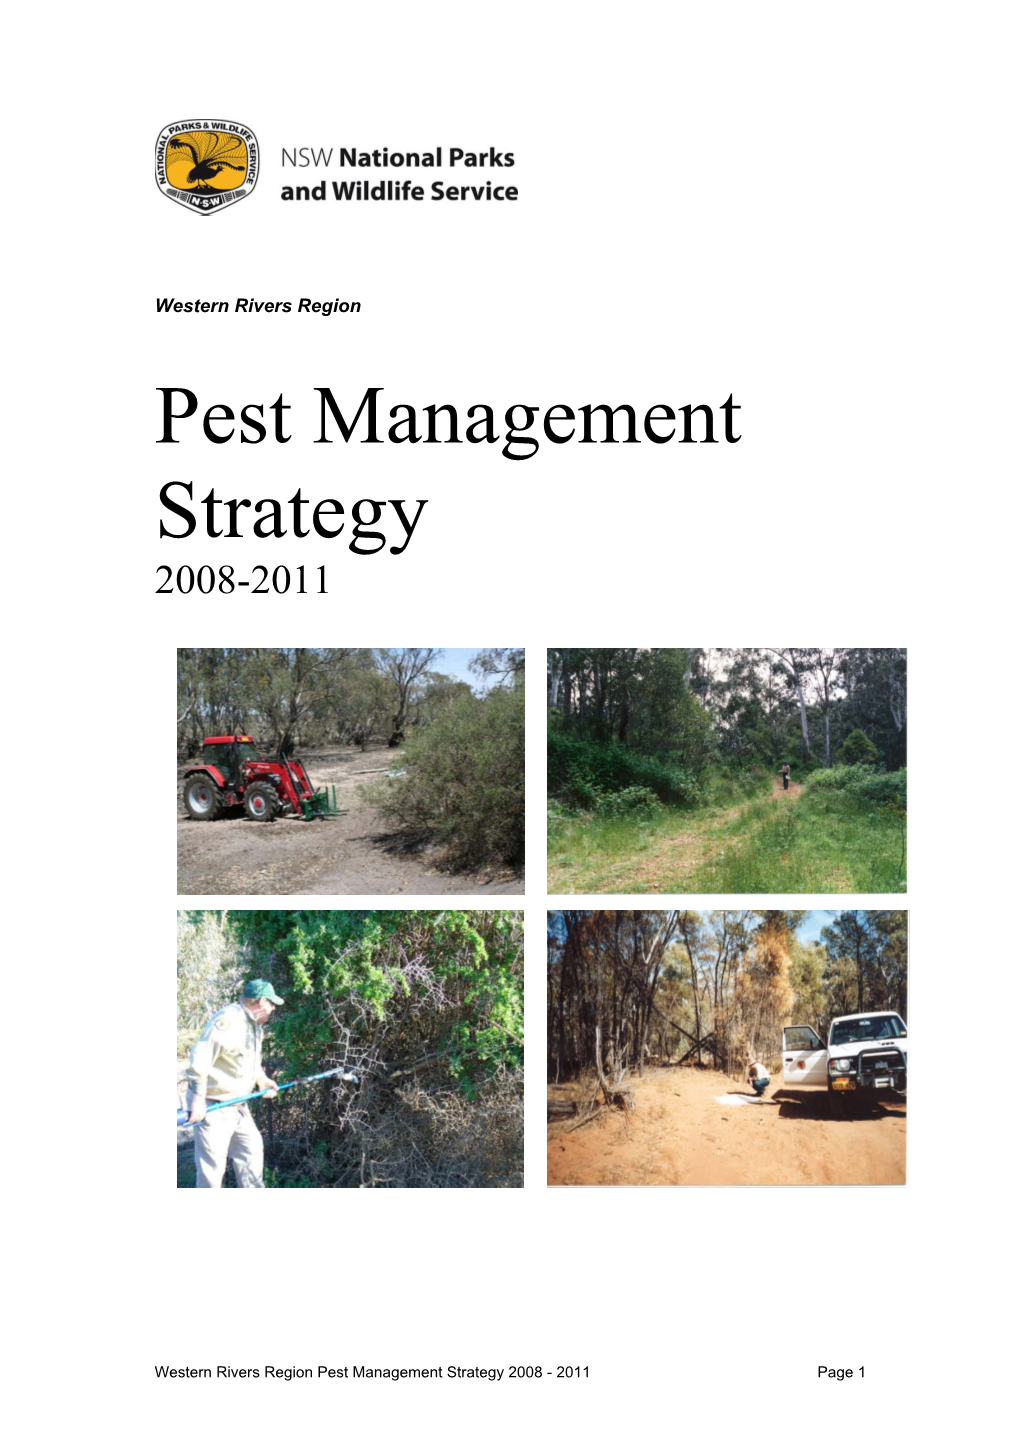 Western River Region Pest Management Strategy 2008-2011